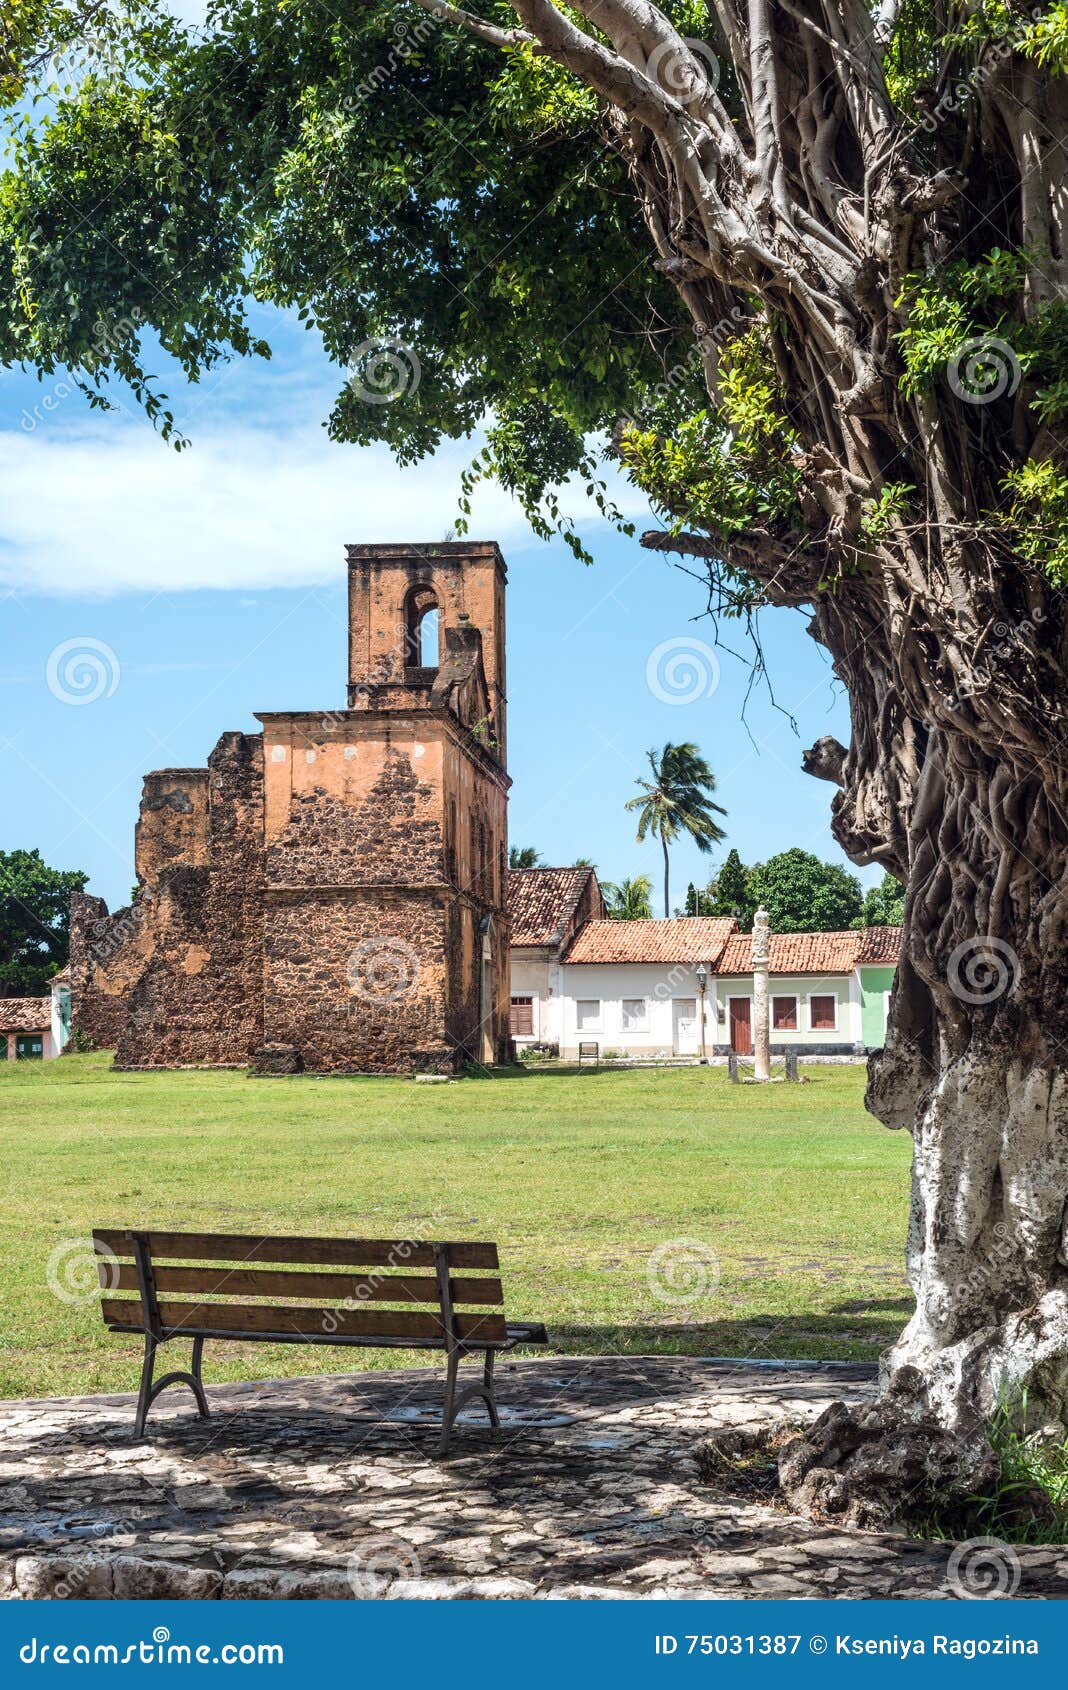 matriz church ruins in the historic city of alcantara